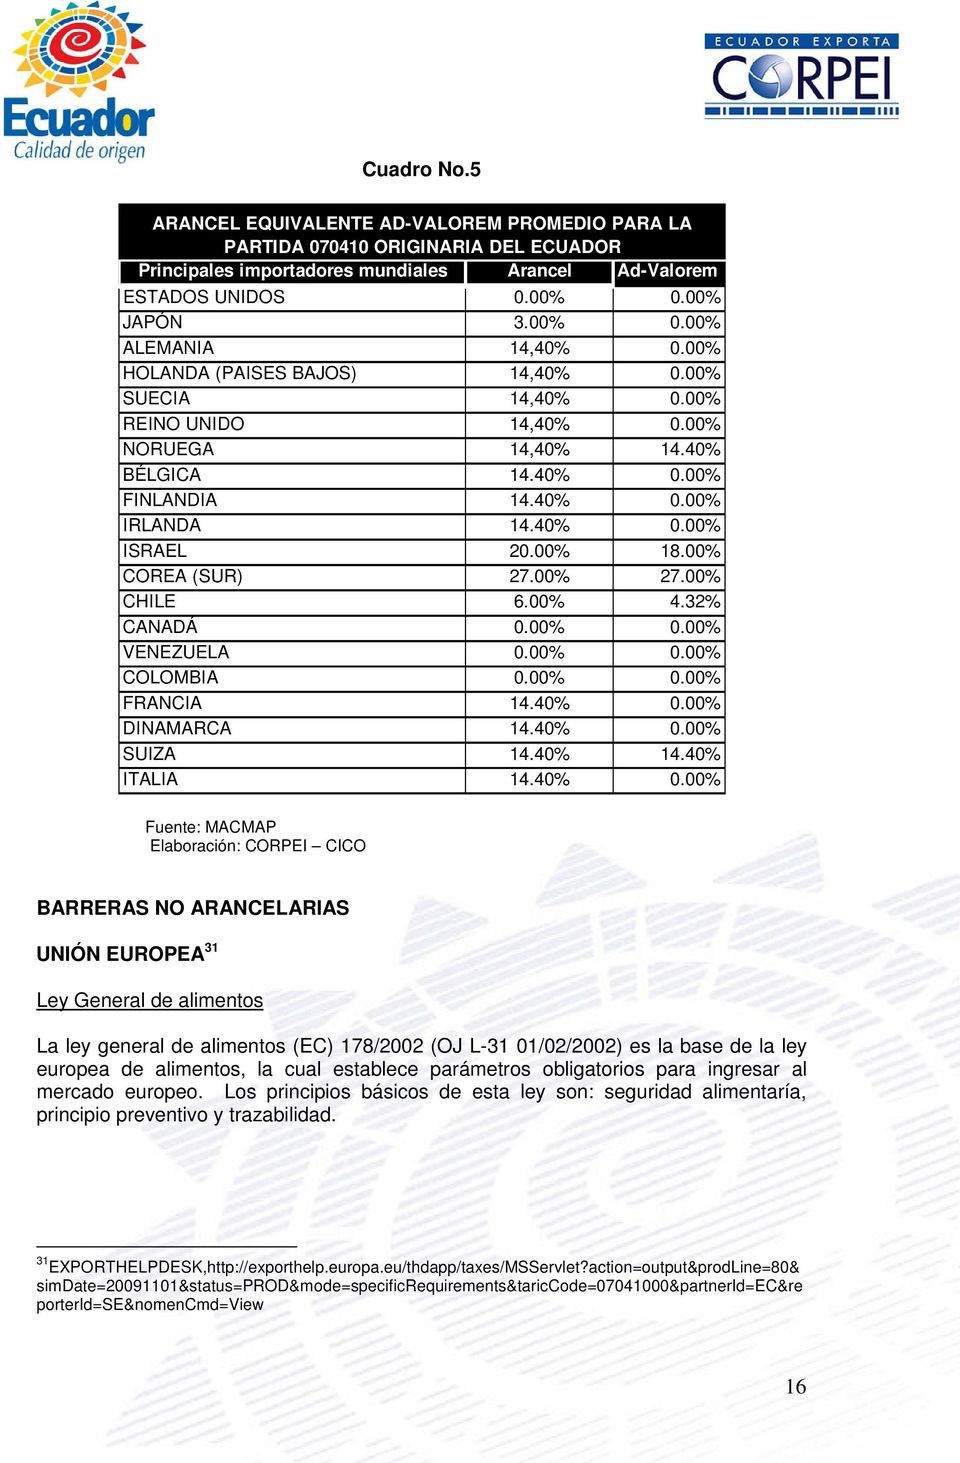 00% COREA (SUR) 27.00% 27.00% CHILE 6.00% 4.32% CANADÁ 0.00% 0.00% VENEZUELA 0.00% 0.00% COLOMBIA 0.00% 0.00% FRANCIA 14.40% 0.